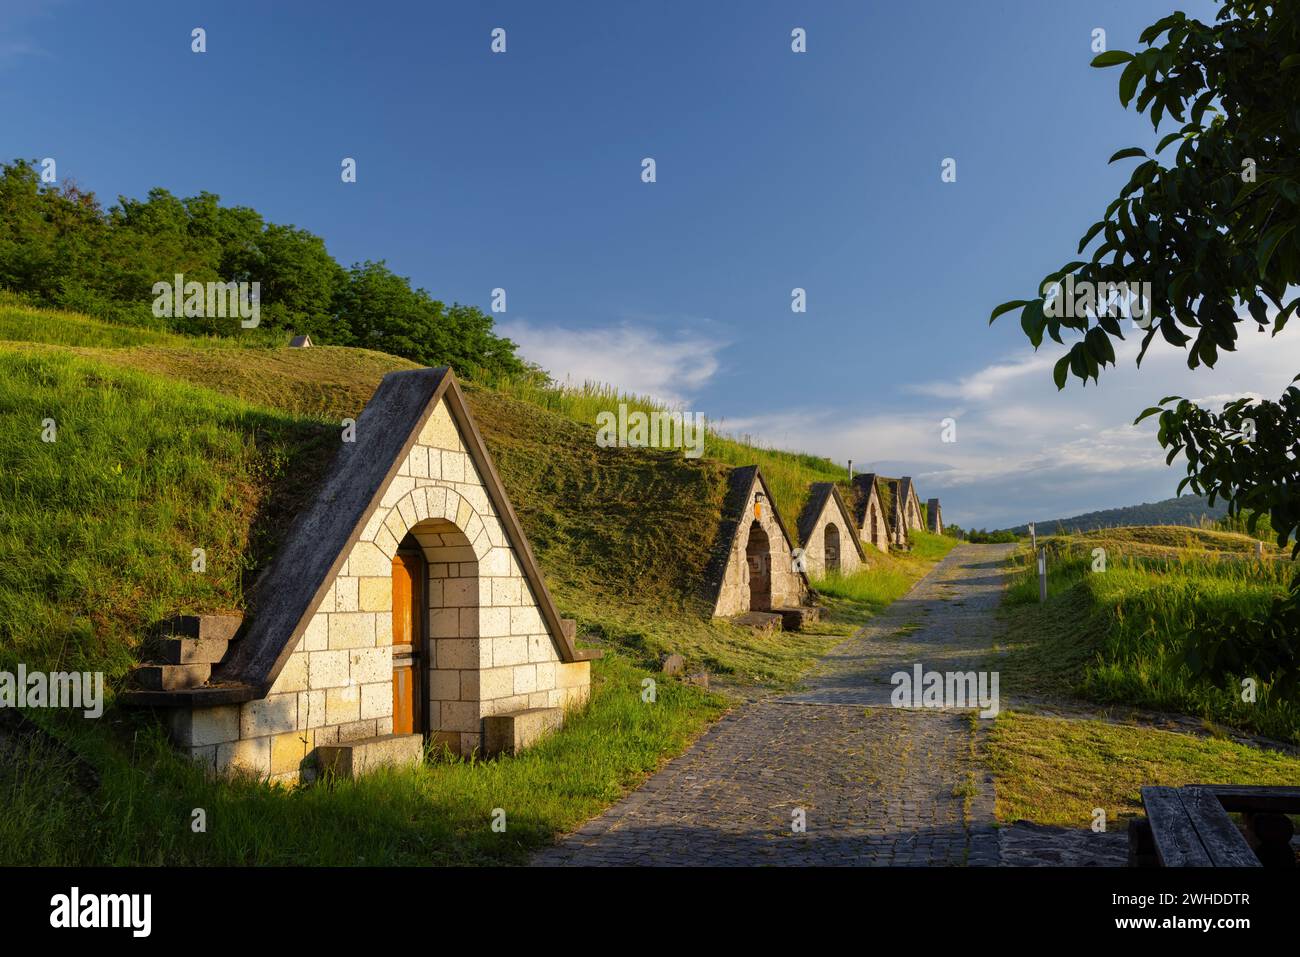 Gombos-hegyi pincesor in Hercegkut, UNESCO site, Great Plain, North Hungary Stock Photo